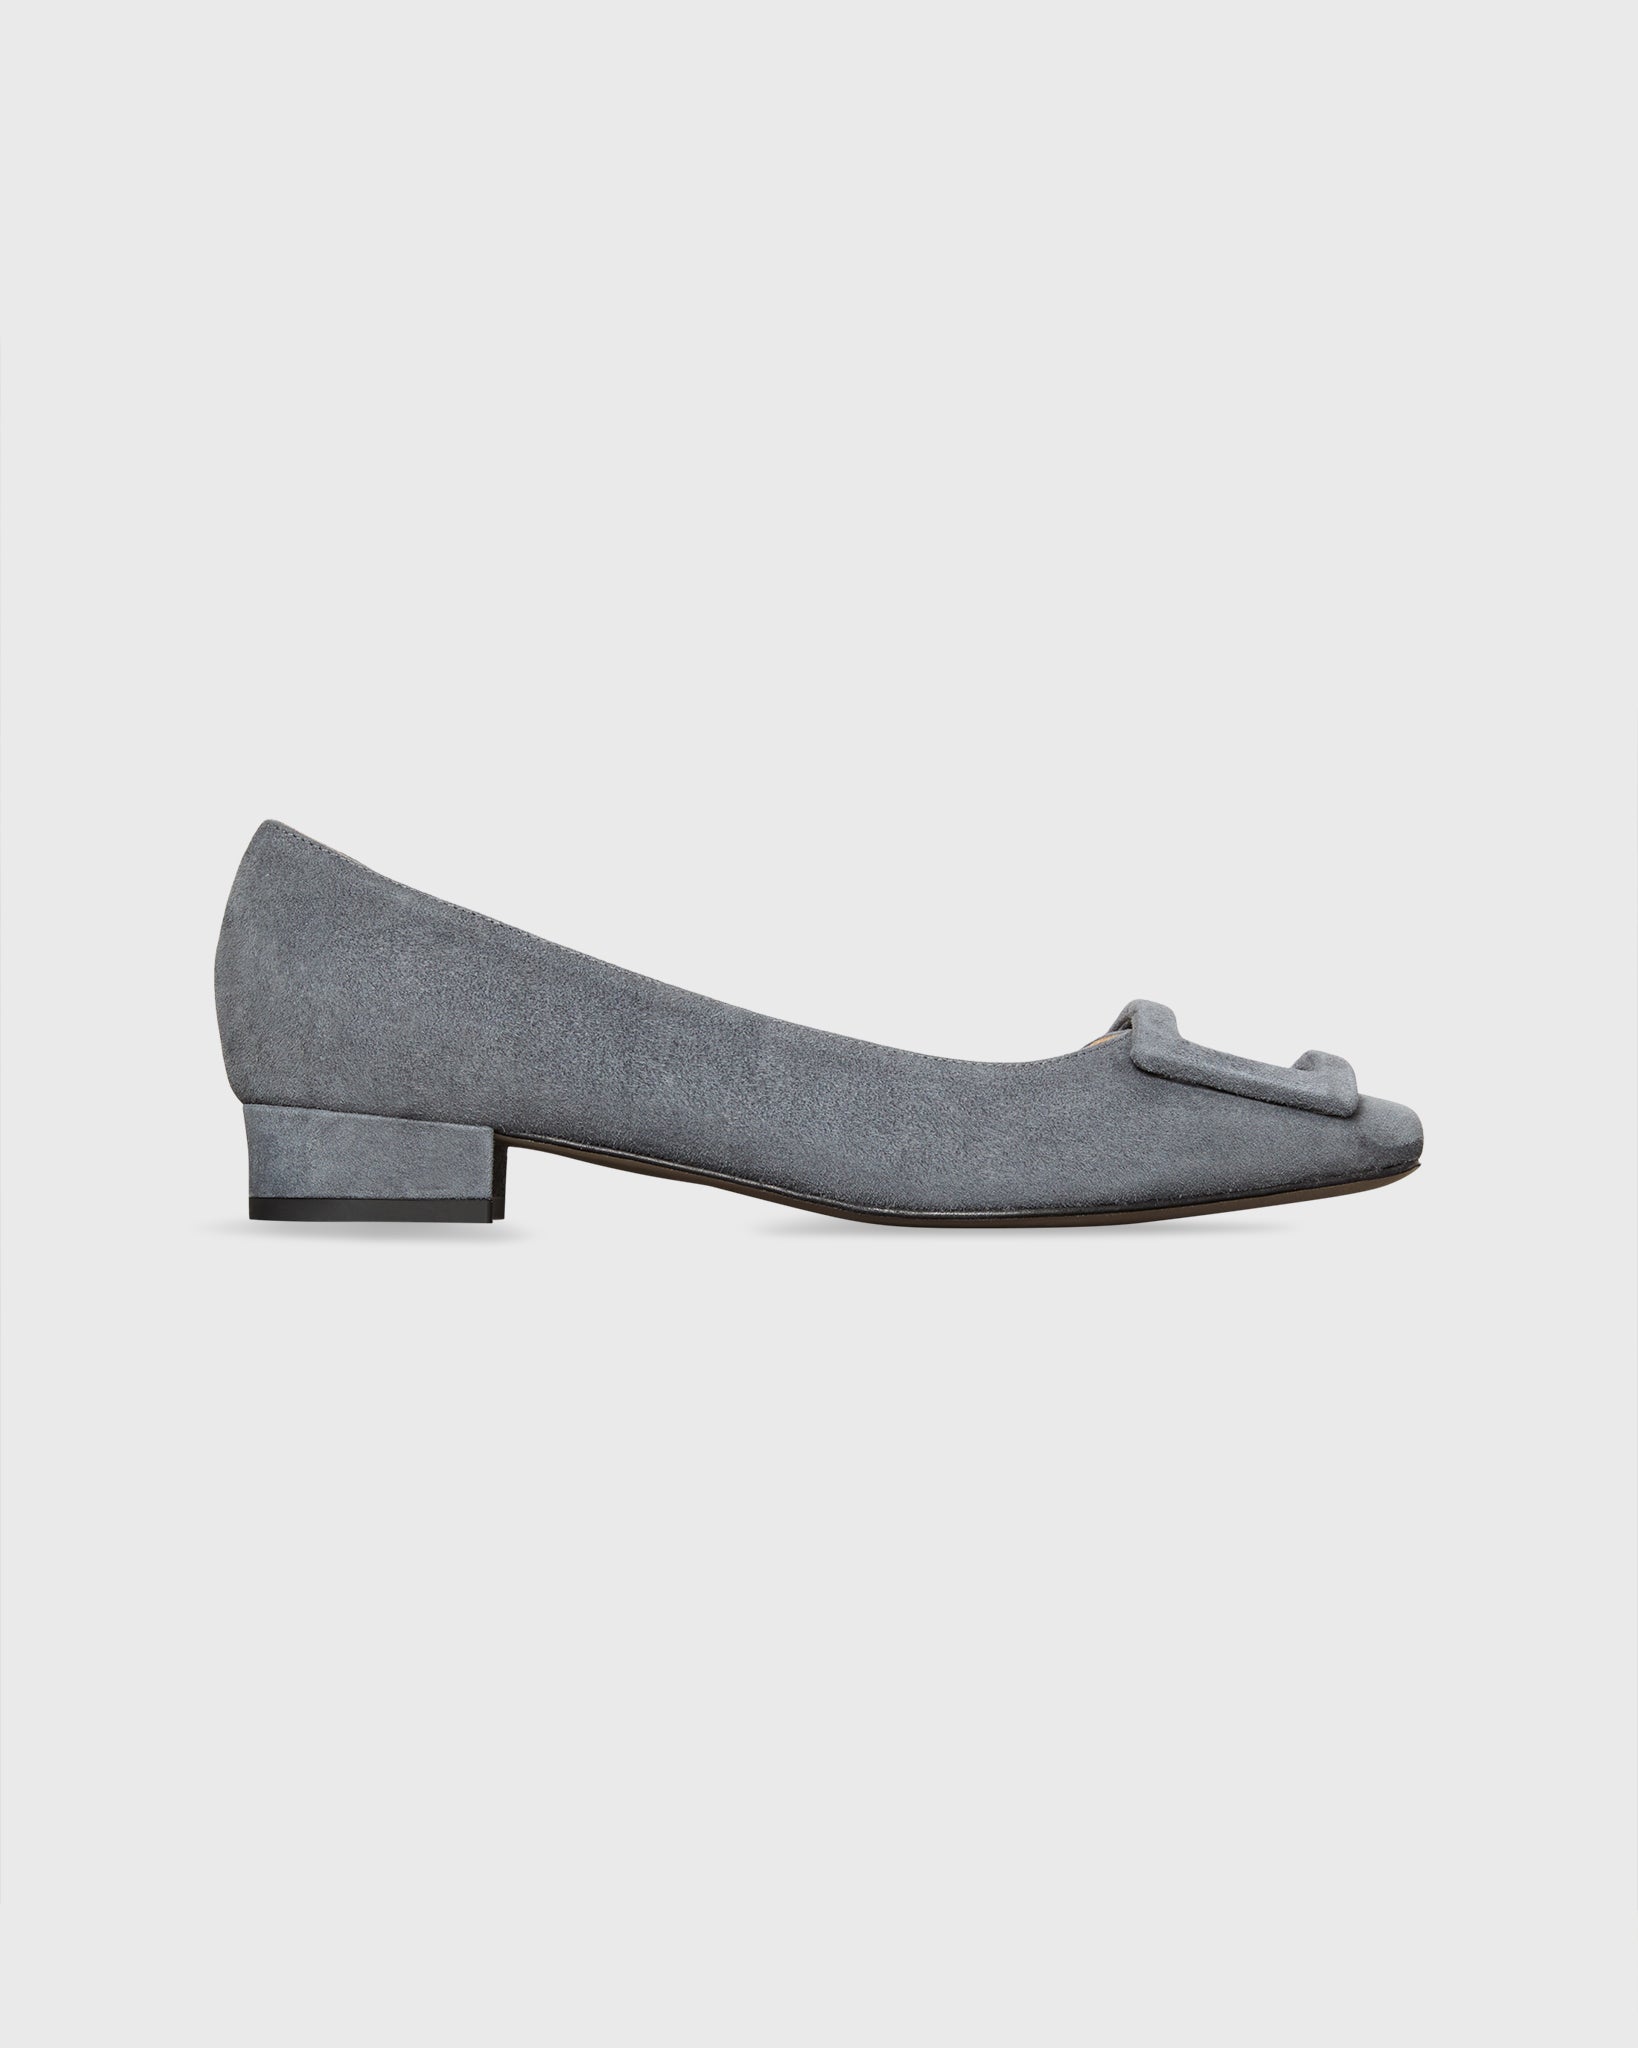 Buckle Shoe in Grey Suede